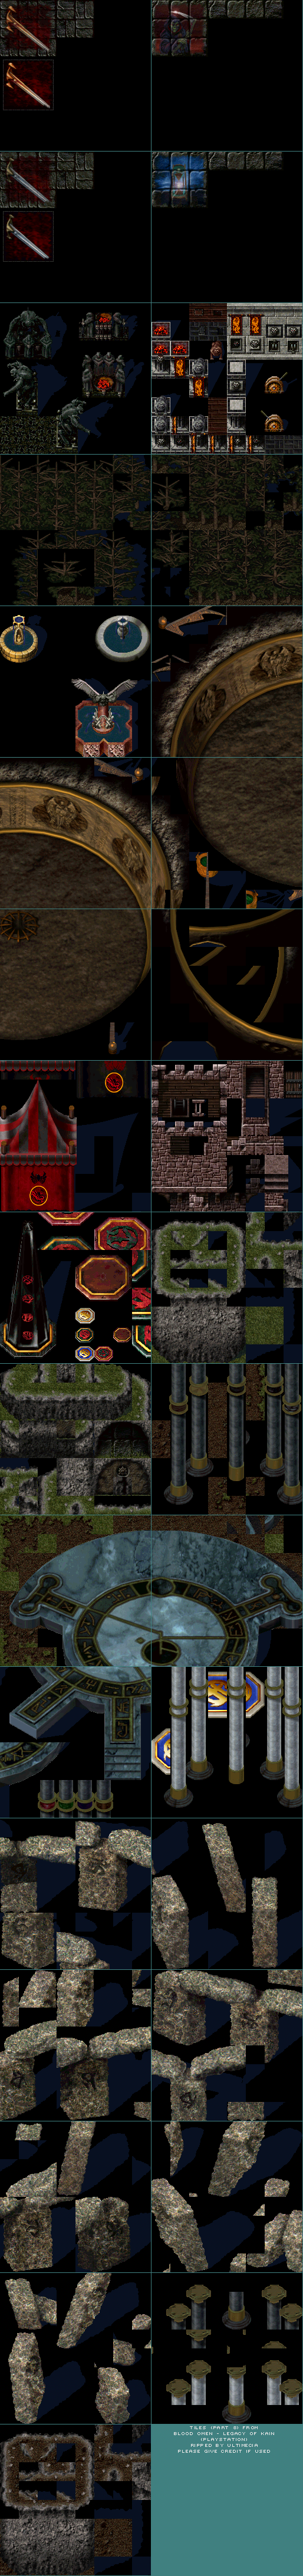 Legacy of Kain: Blood Omen - Tiles 08